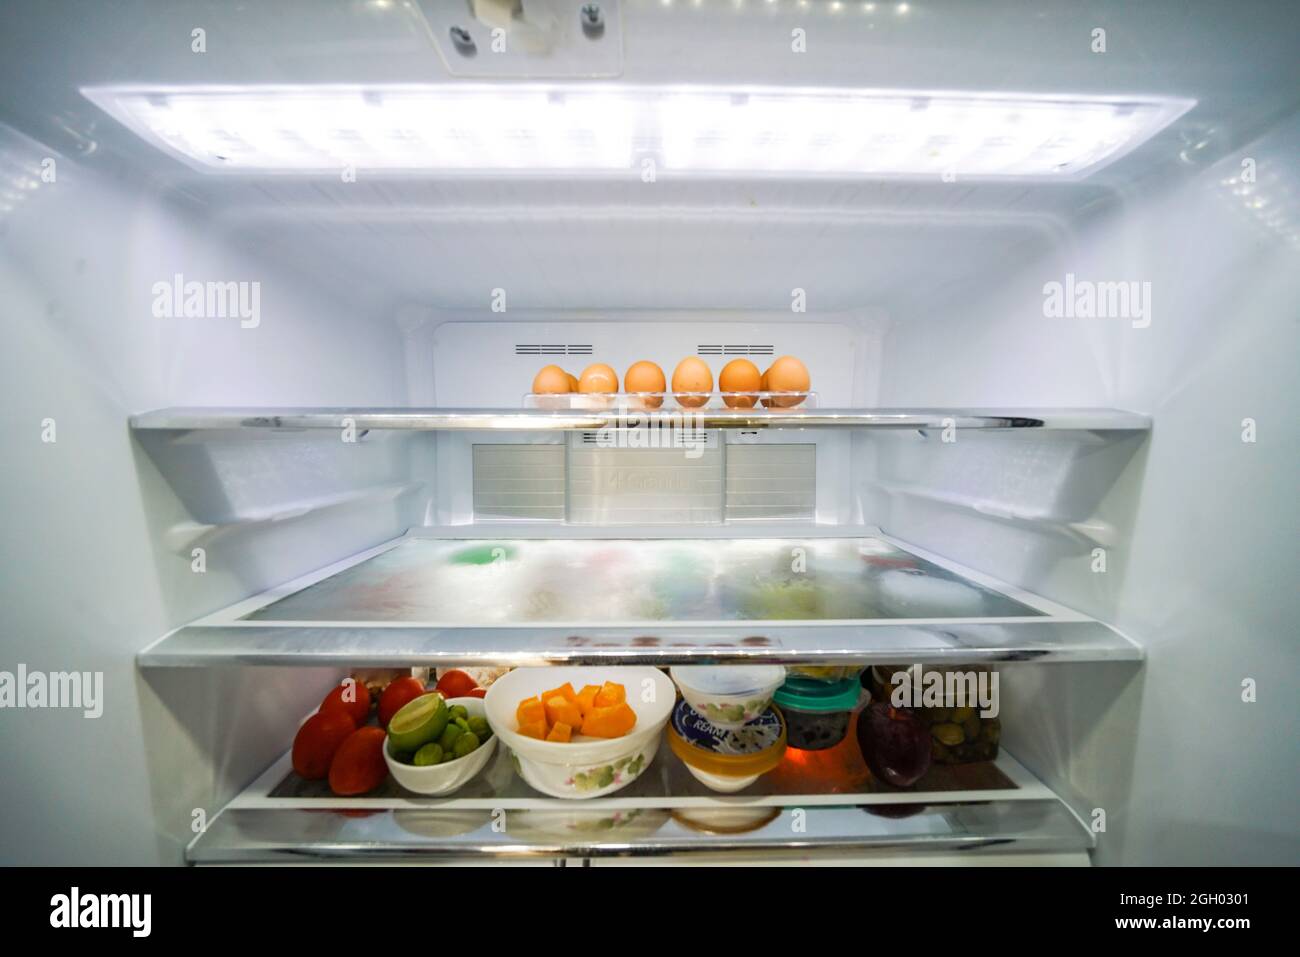 https://c8.alamy.com/comp/2GH0301/food-inside-refrigerator-in-the-kitchen-2GH0301.jpg